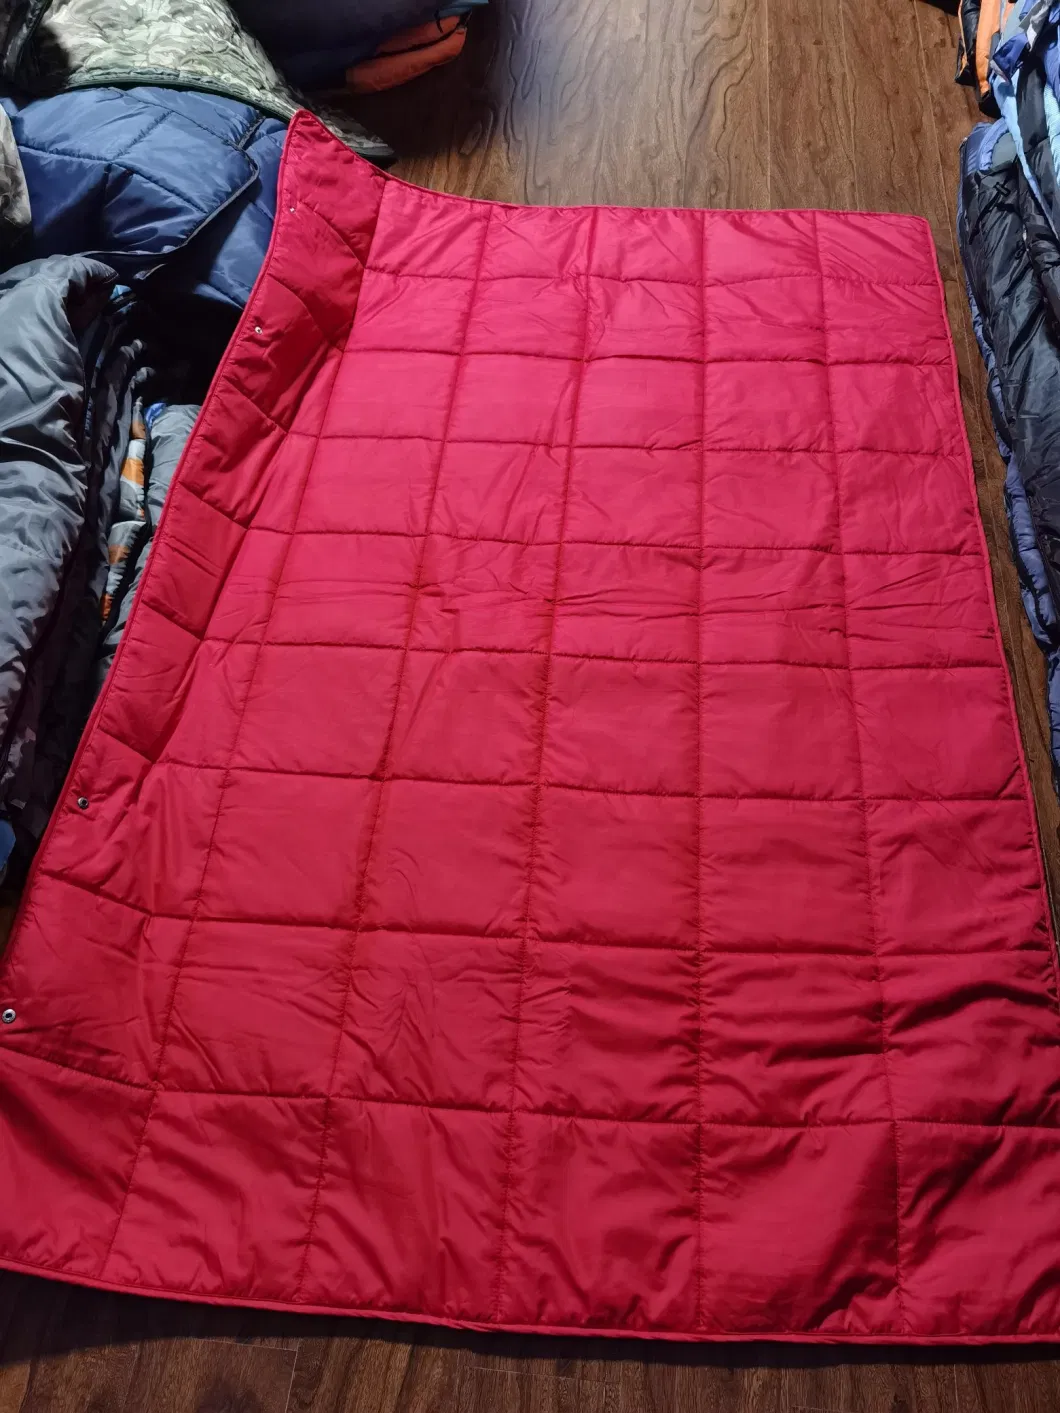 Camping Blanket Outdoor Blanket Down Duck Blanket Ultra Light Blanket